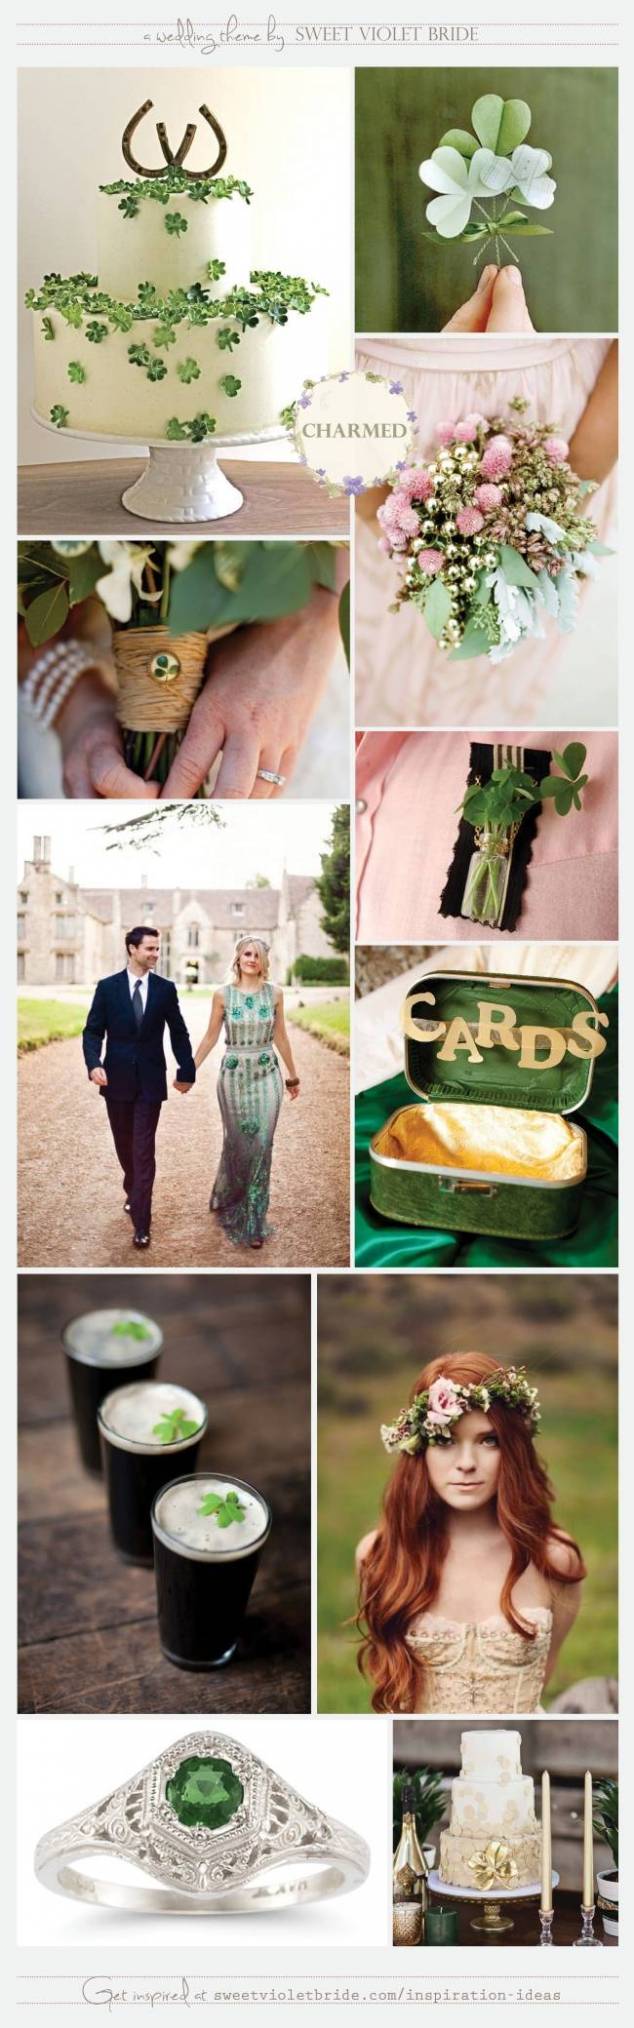 Charmed - St. Patricks Day Wedding Inspiration by Sweet Violet Bride